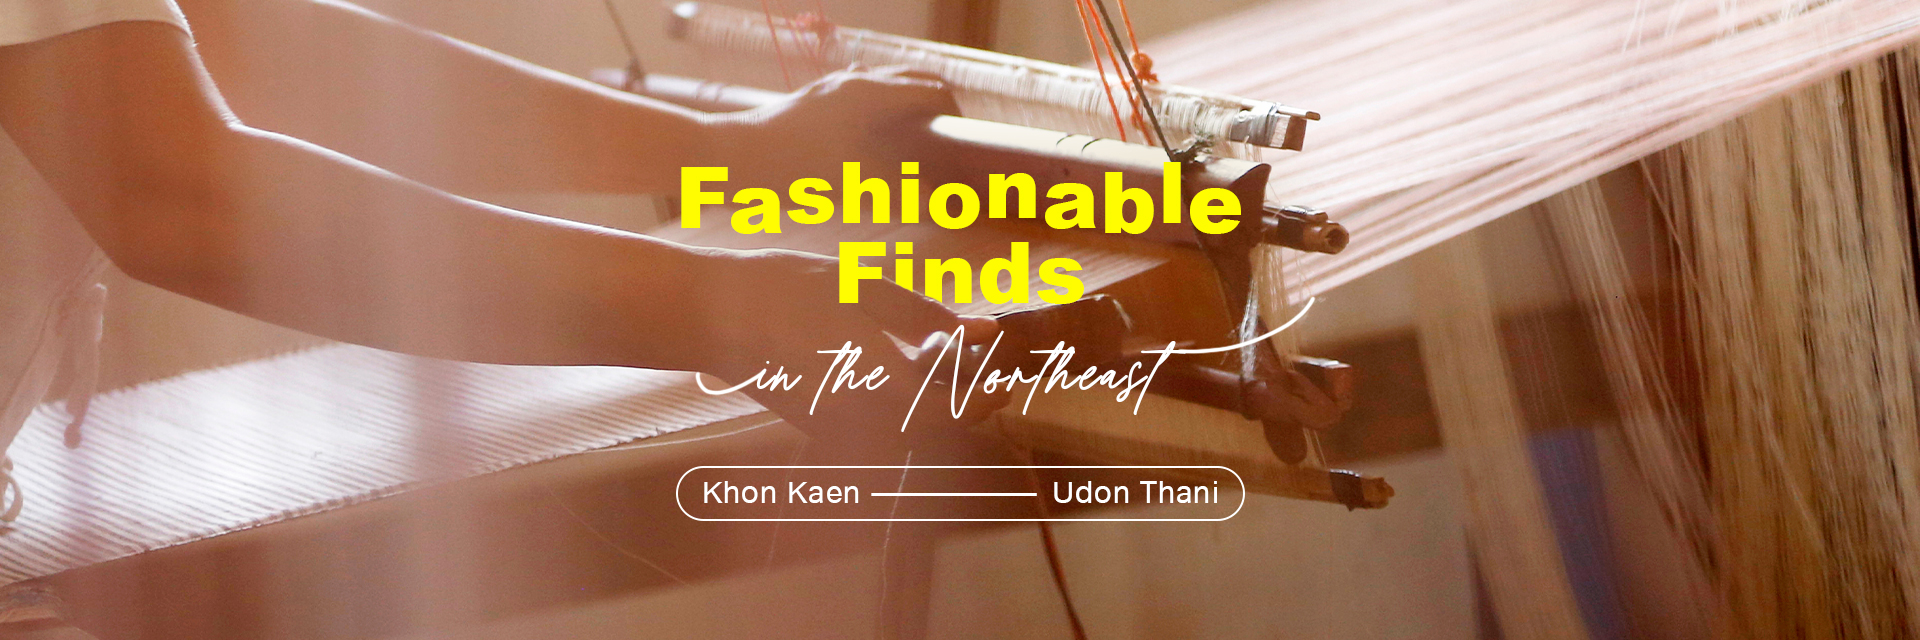 Fashionable Finds in Northeastern Thai: Khon Kaen - Udon Thani